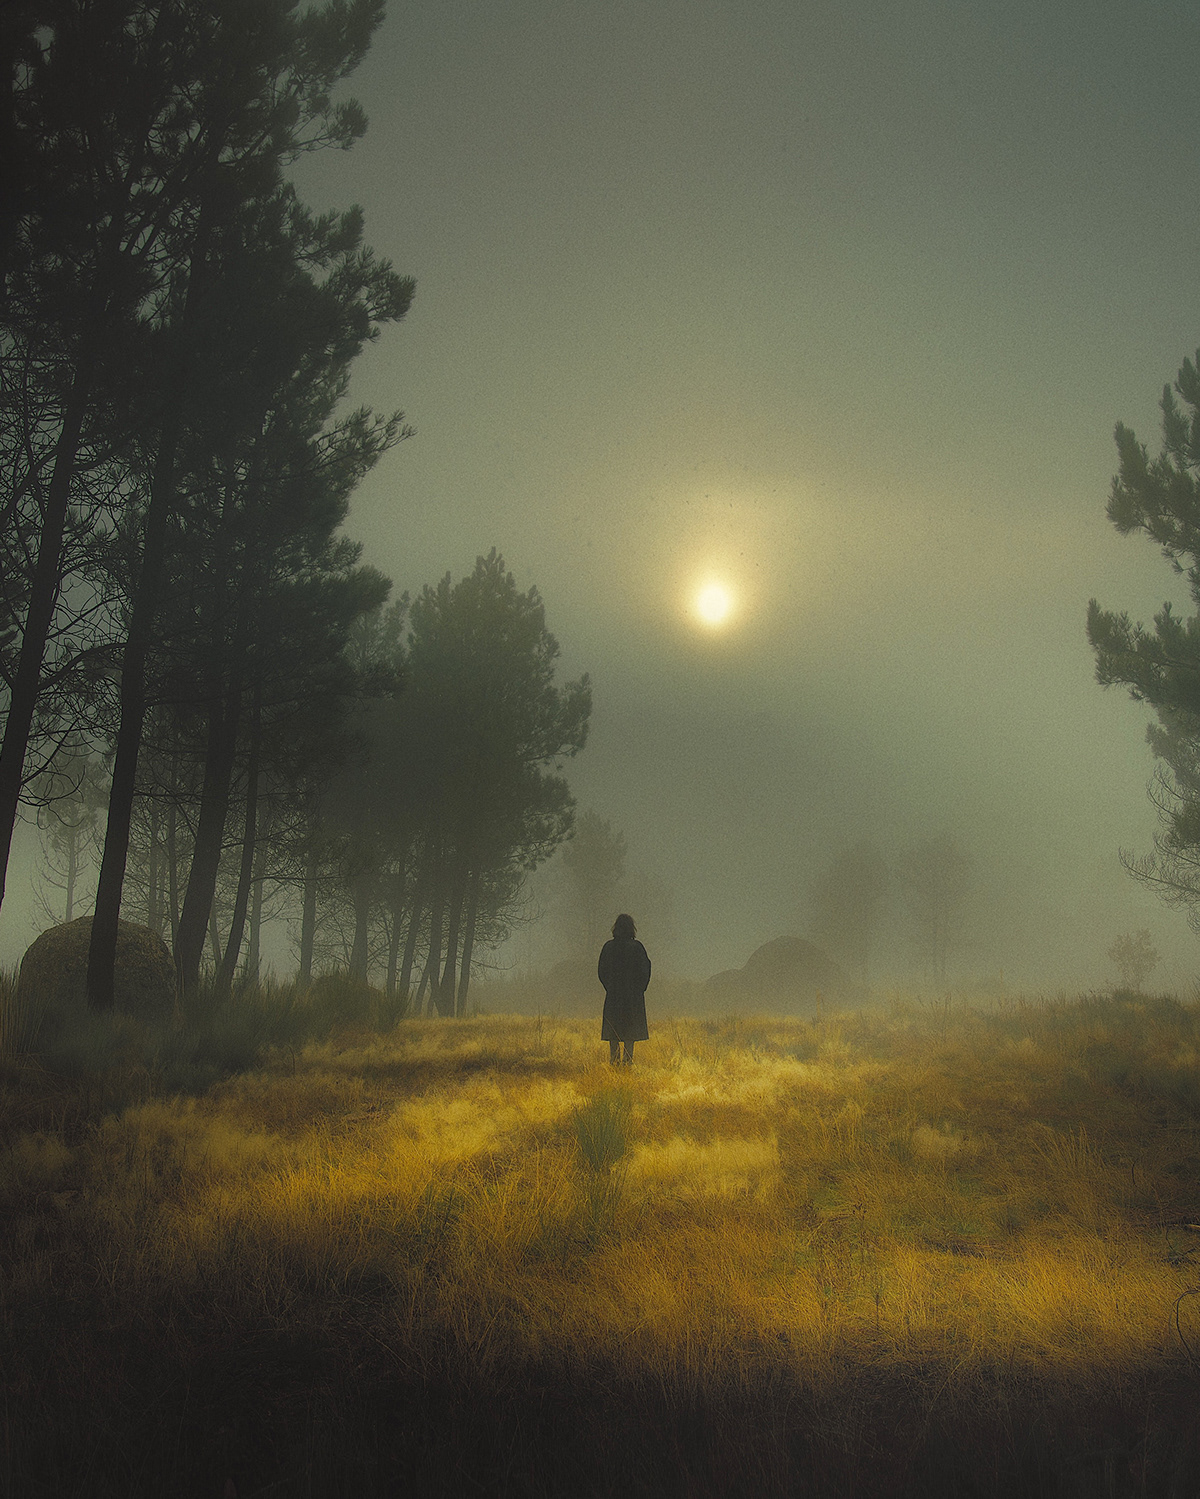 The Velvet Kingdom Wonderful Misty And Foggy Landscape Photography Series By Henri Prestes 1